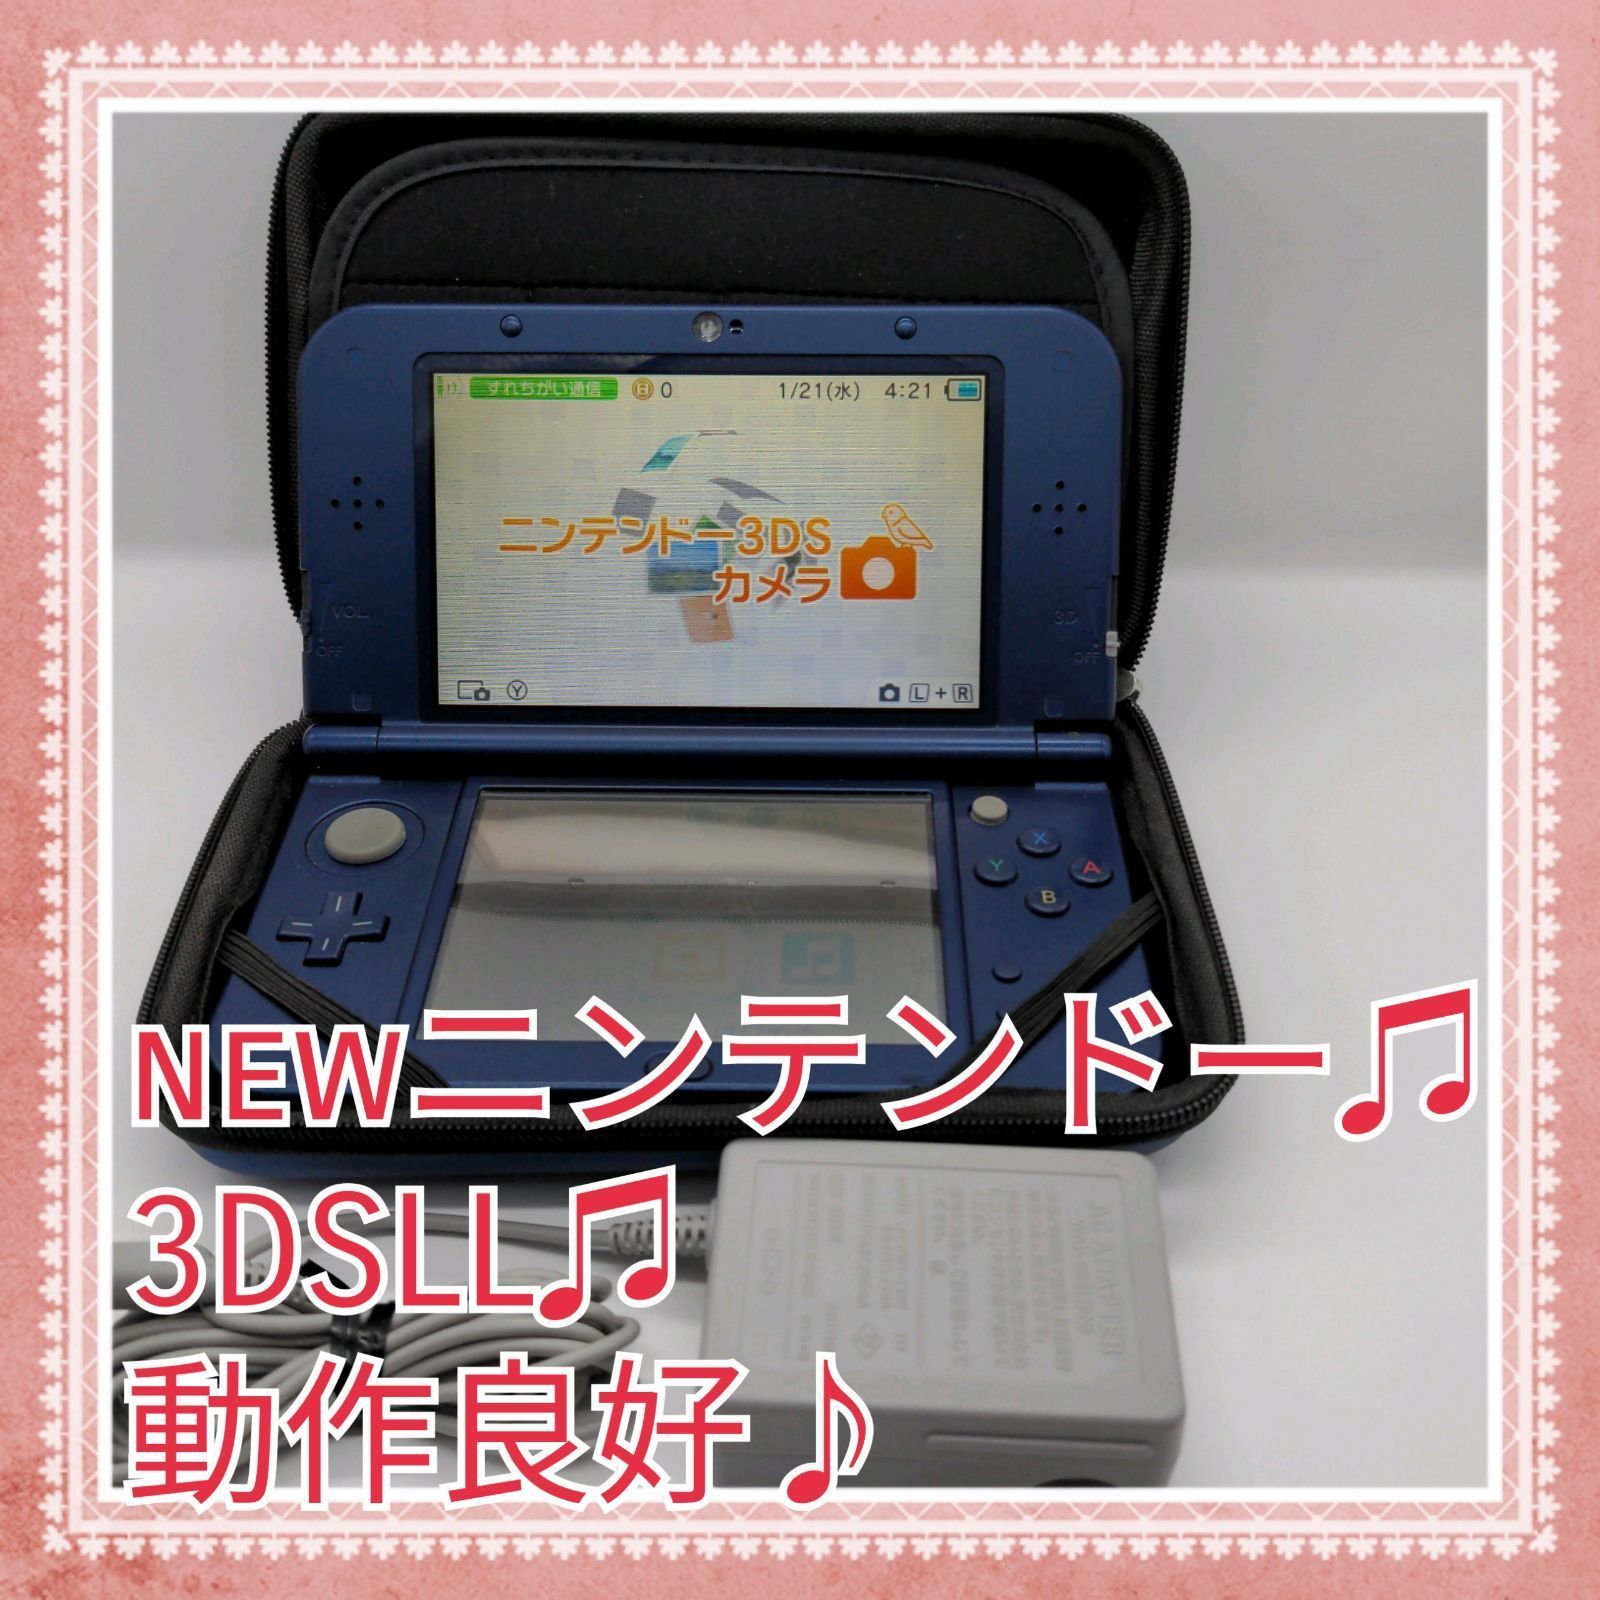 New ニンテンドー 3DS LL メタリックブルー ポケモンソフト付-